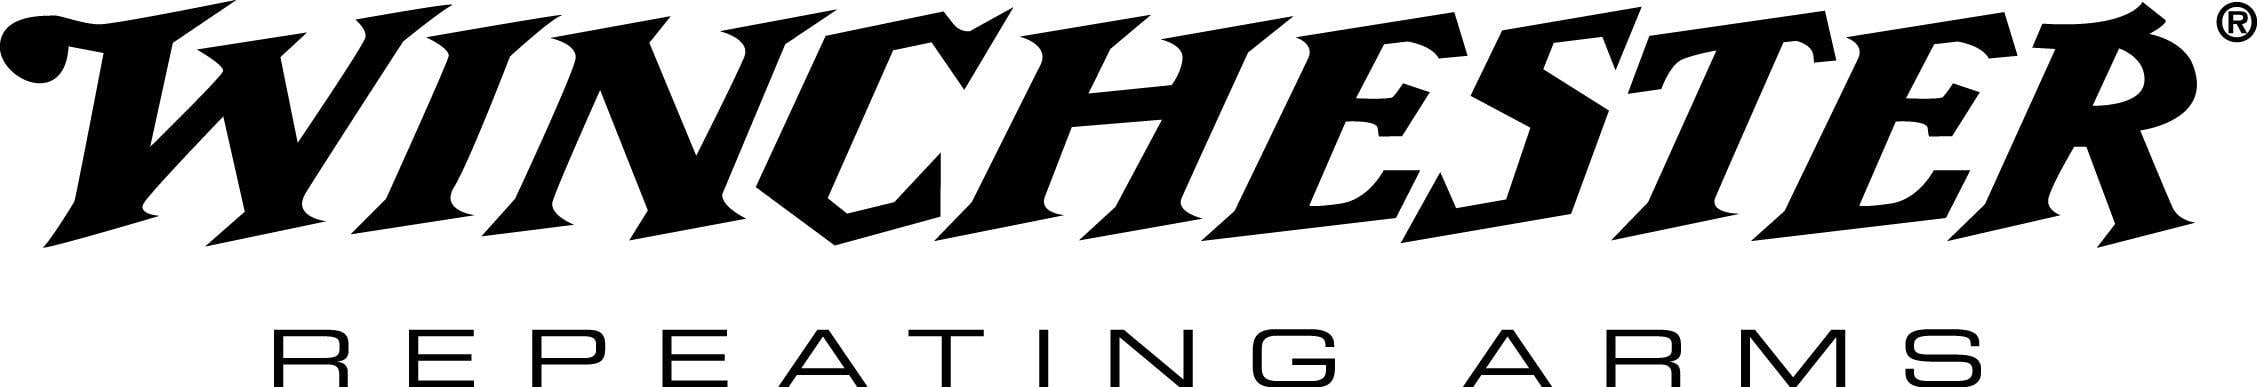 Gun Manufacturer Logo - Winchester Repeating Arms Logos